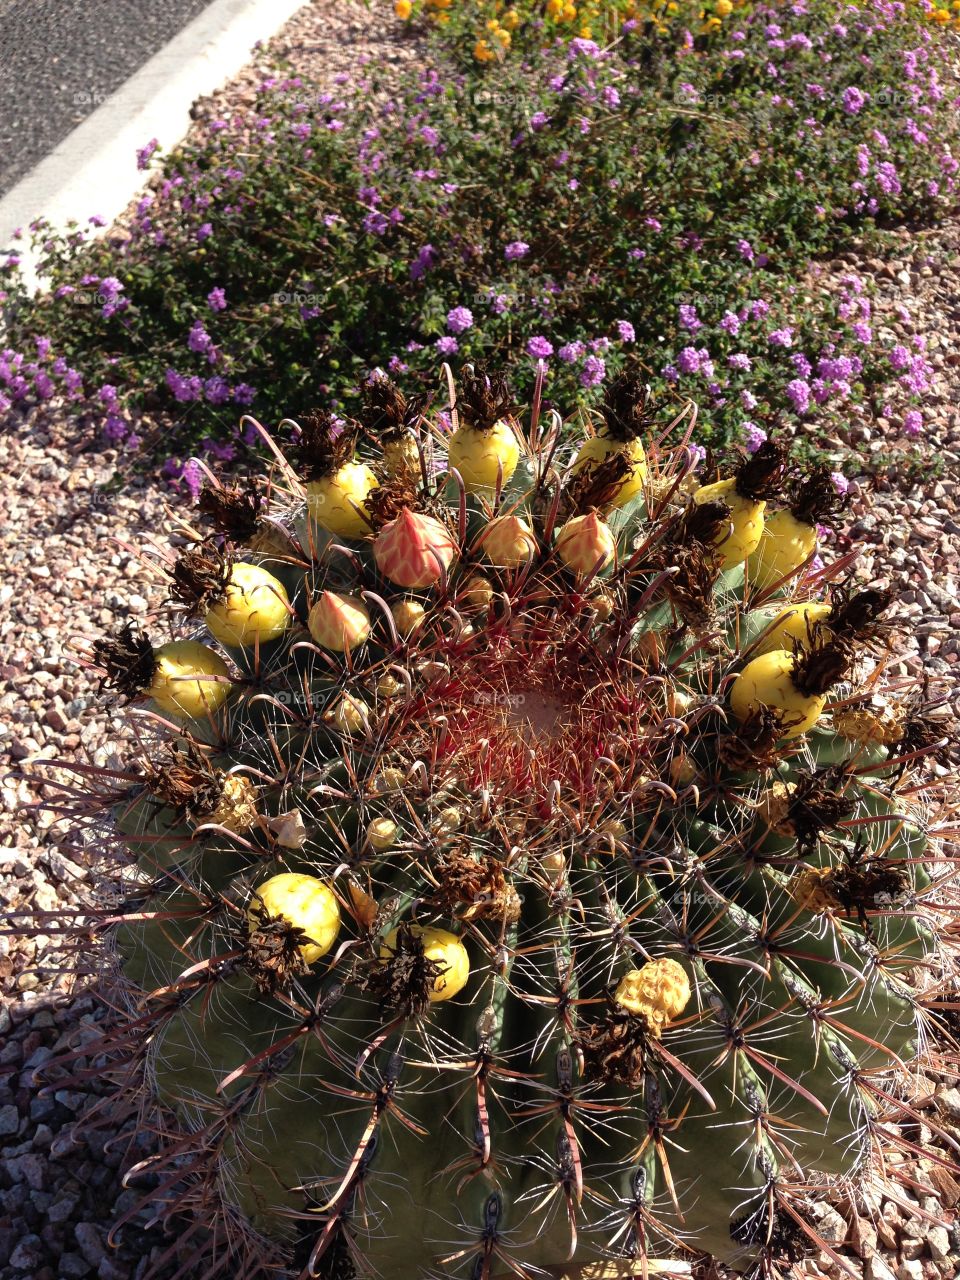 Z plant. Round plant in Tucson